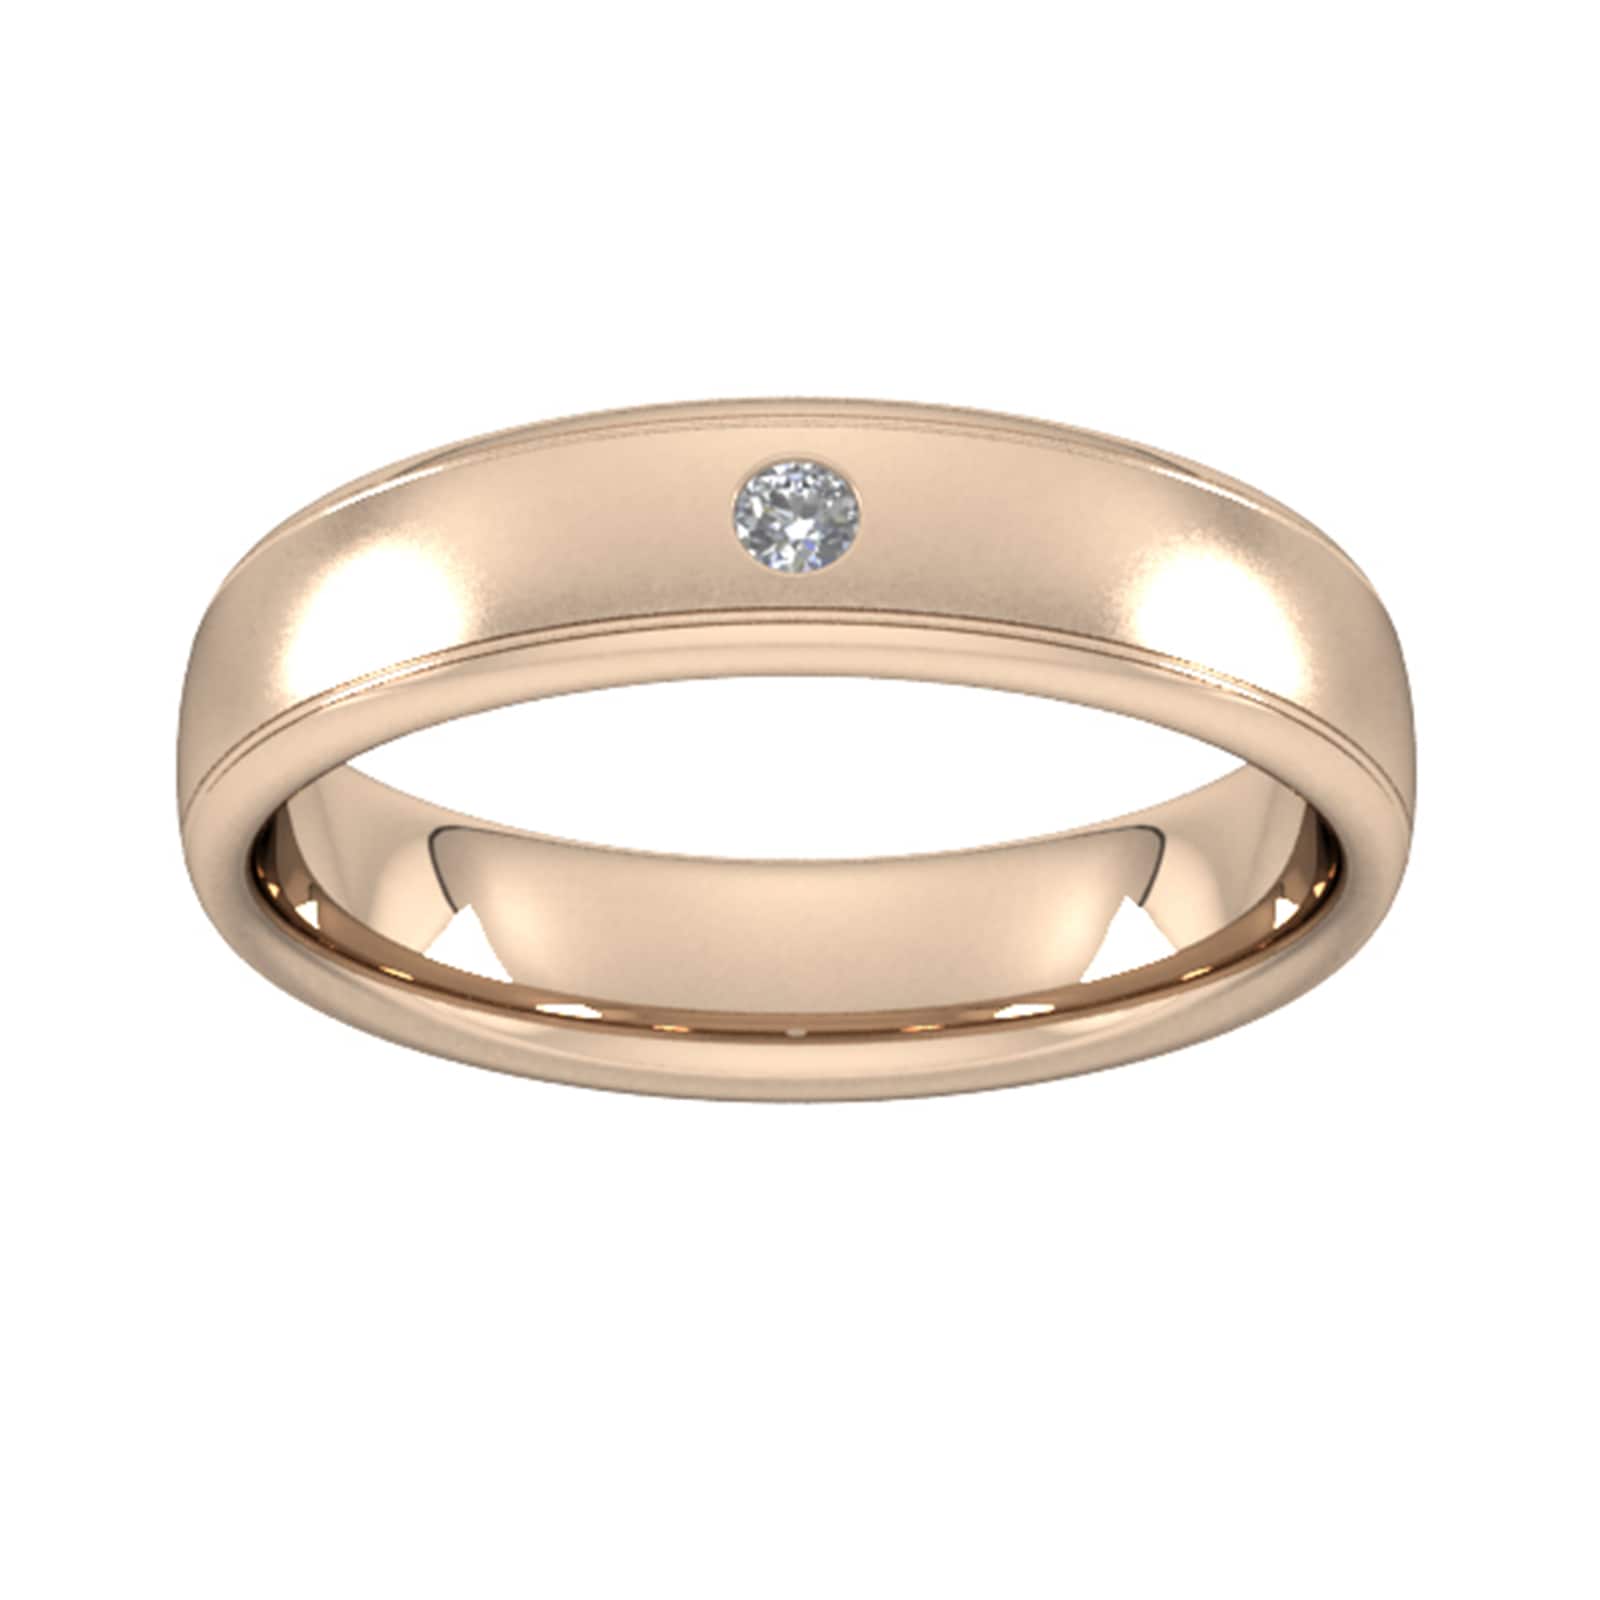 5mm Brilliant Cut Diamond Set Wedding Ring In 18 Carat Rose Gold - Ring Size P